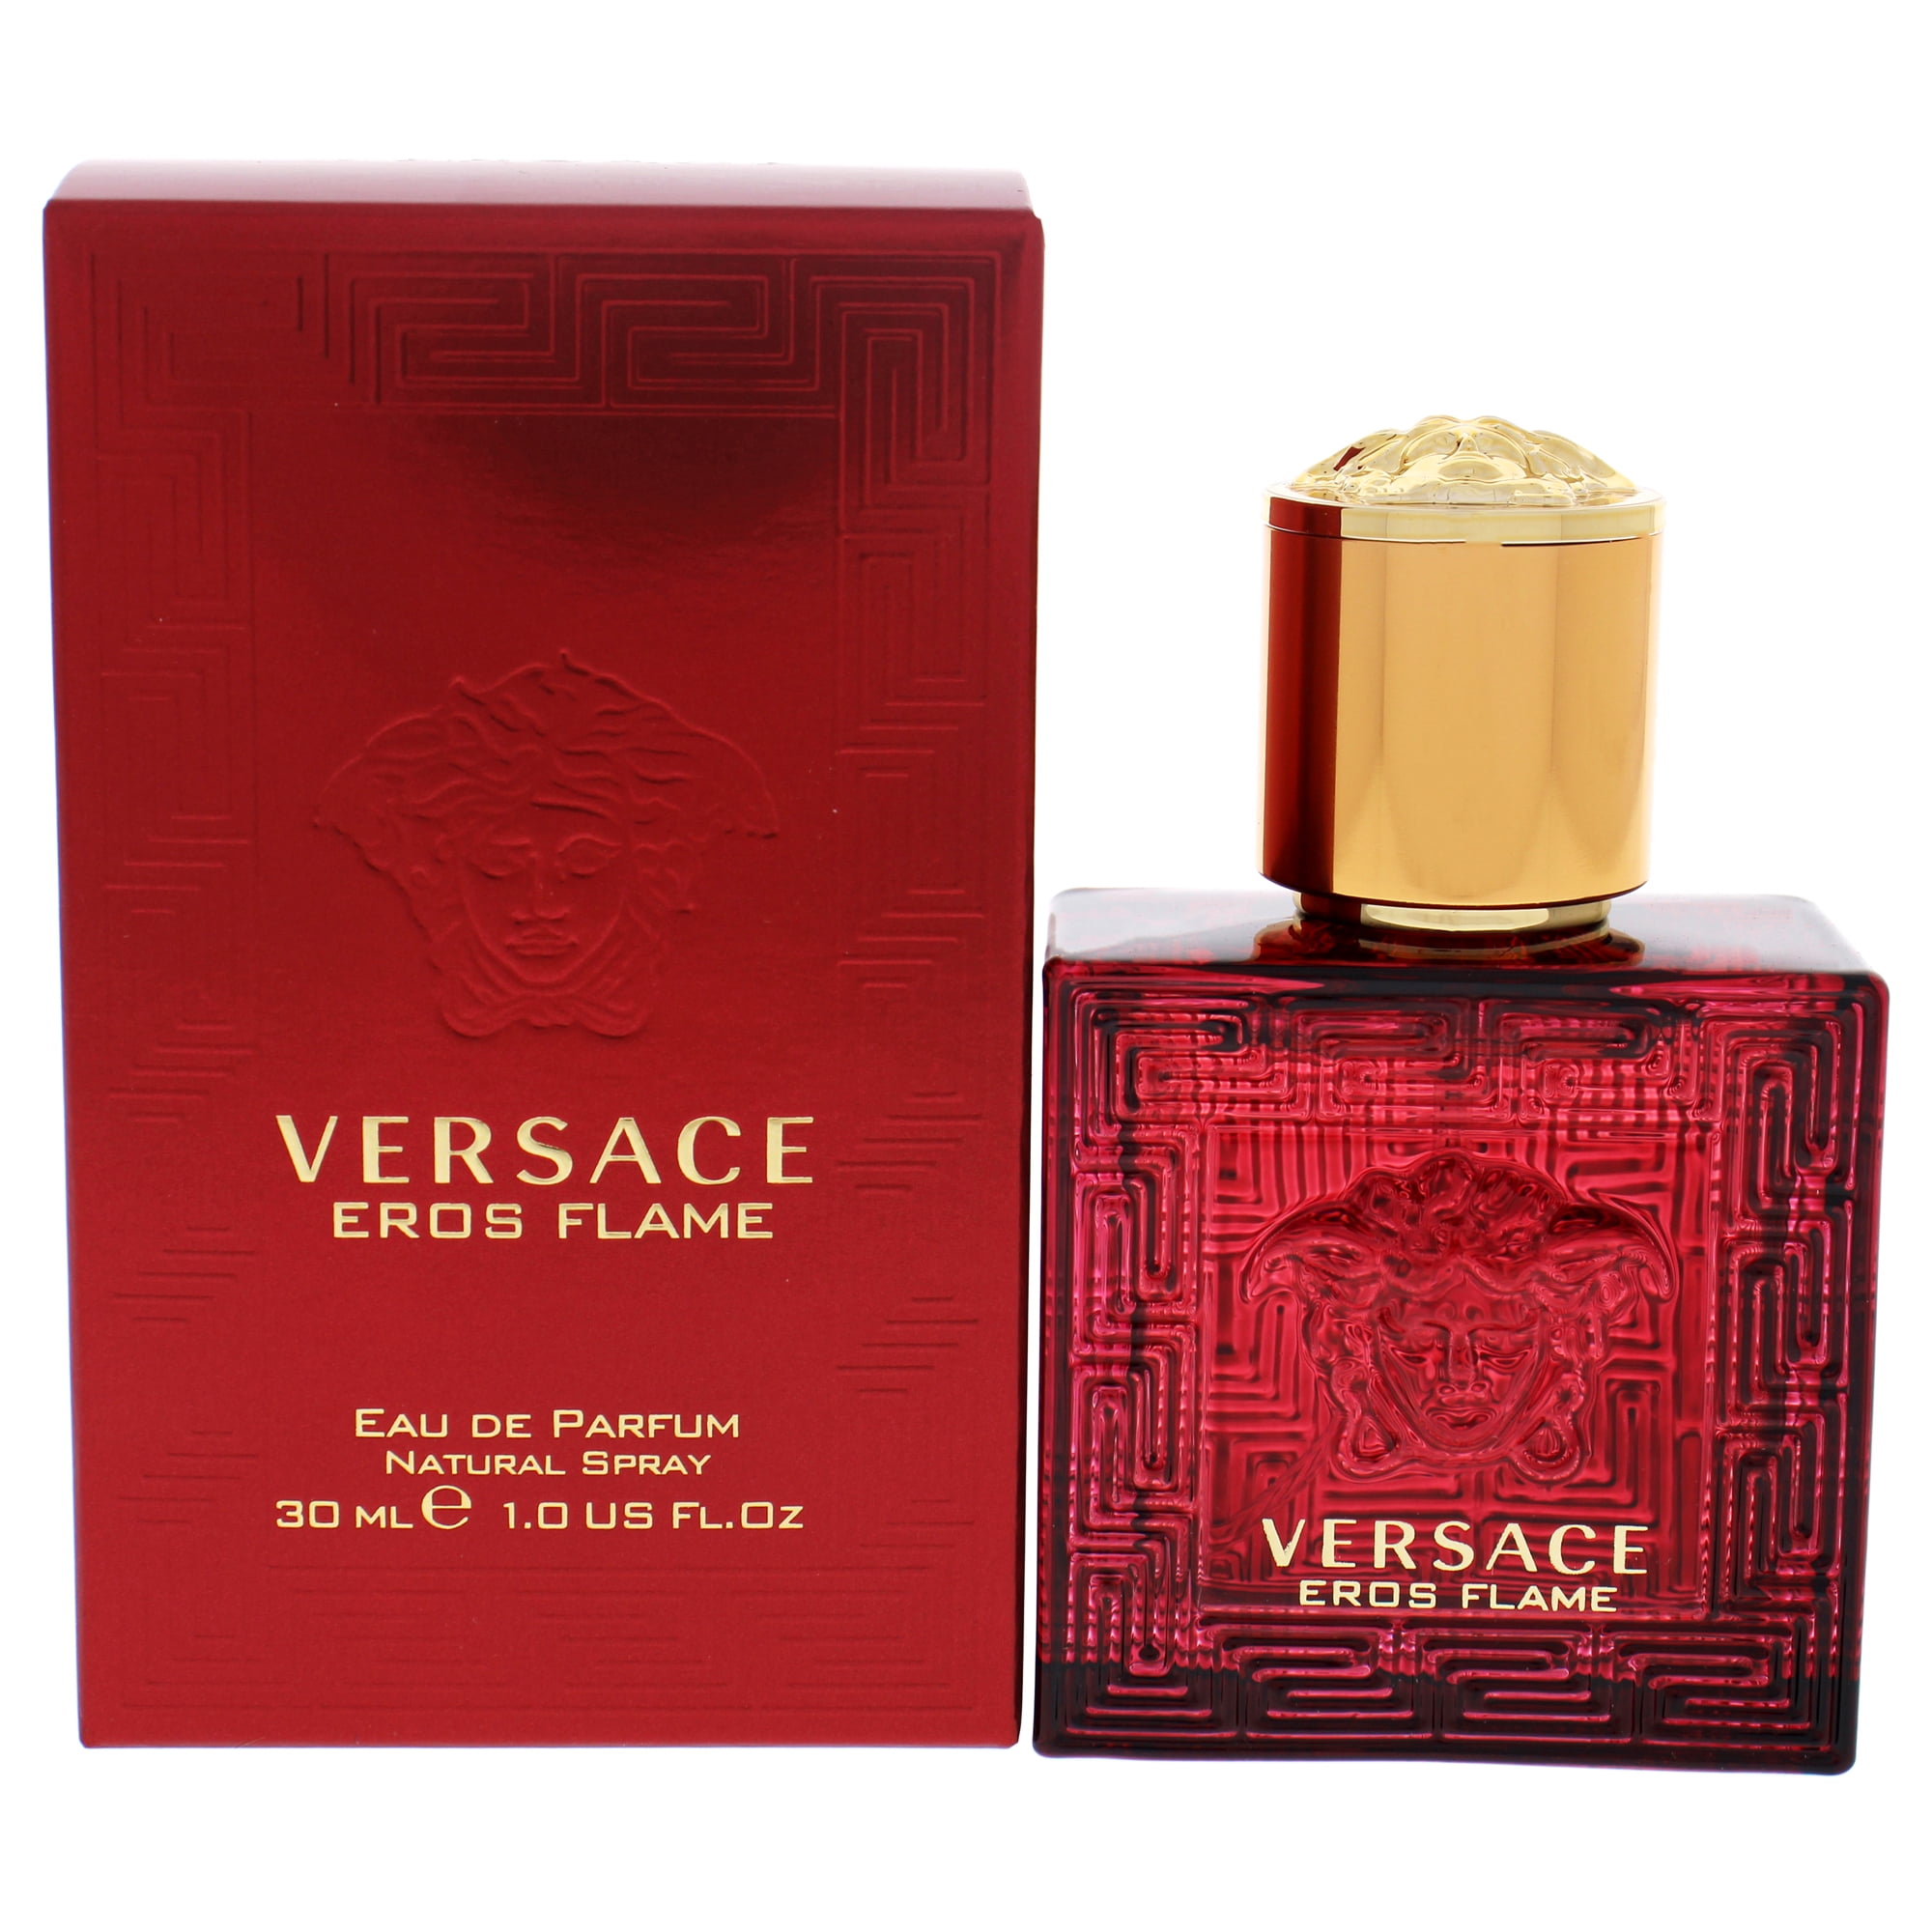 Banyan Fahrenheit blad Versace Eros Flame Eau De Parfum, Cologne for Men, 1.7 Oz - Walmart.com